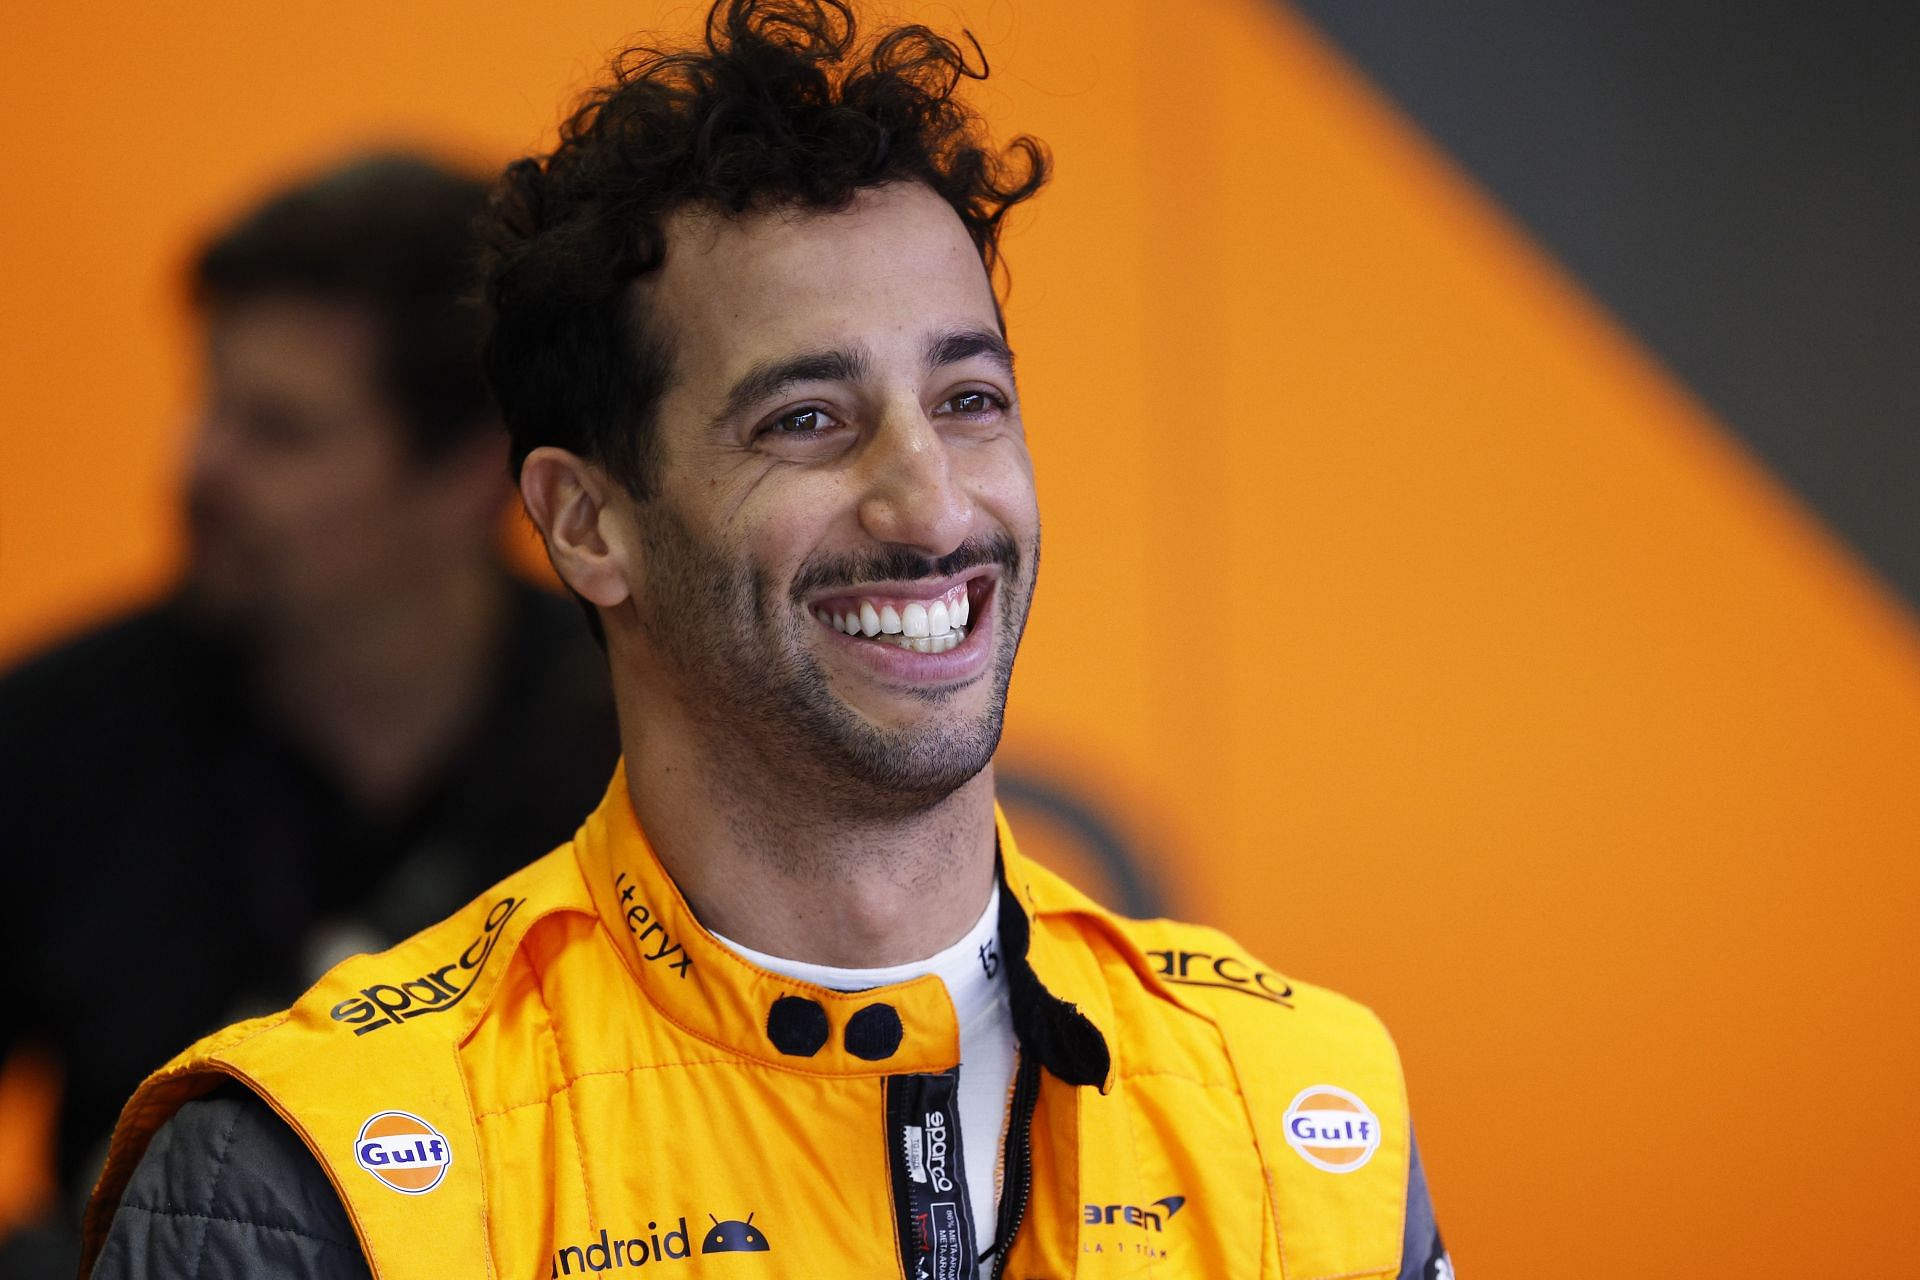 Daniel Ricciardo has won eight Grand Prix races in Formula 1.